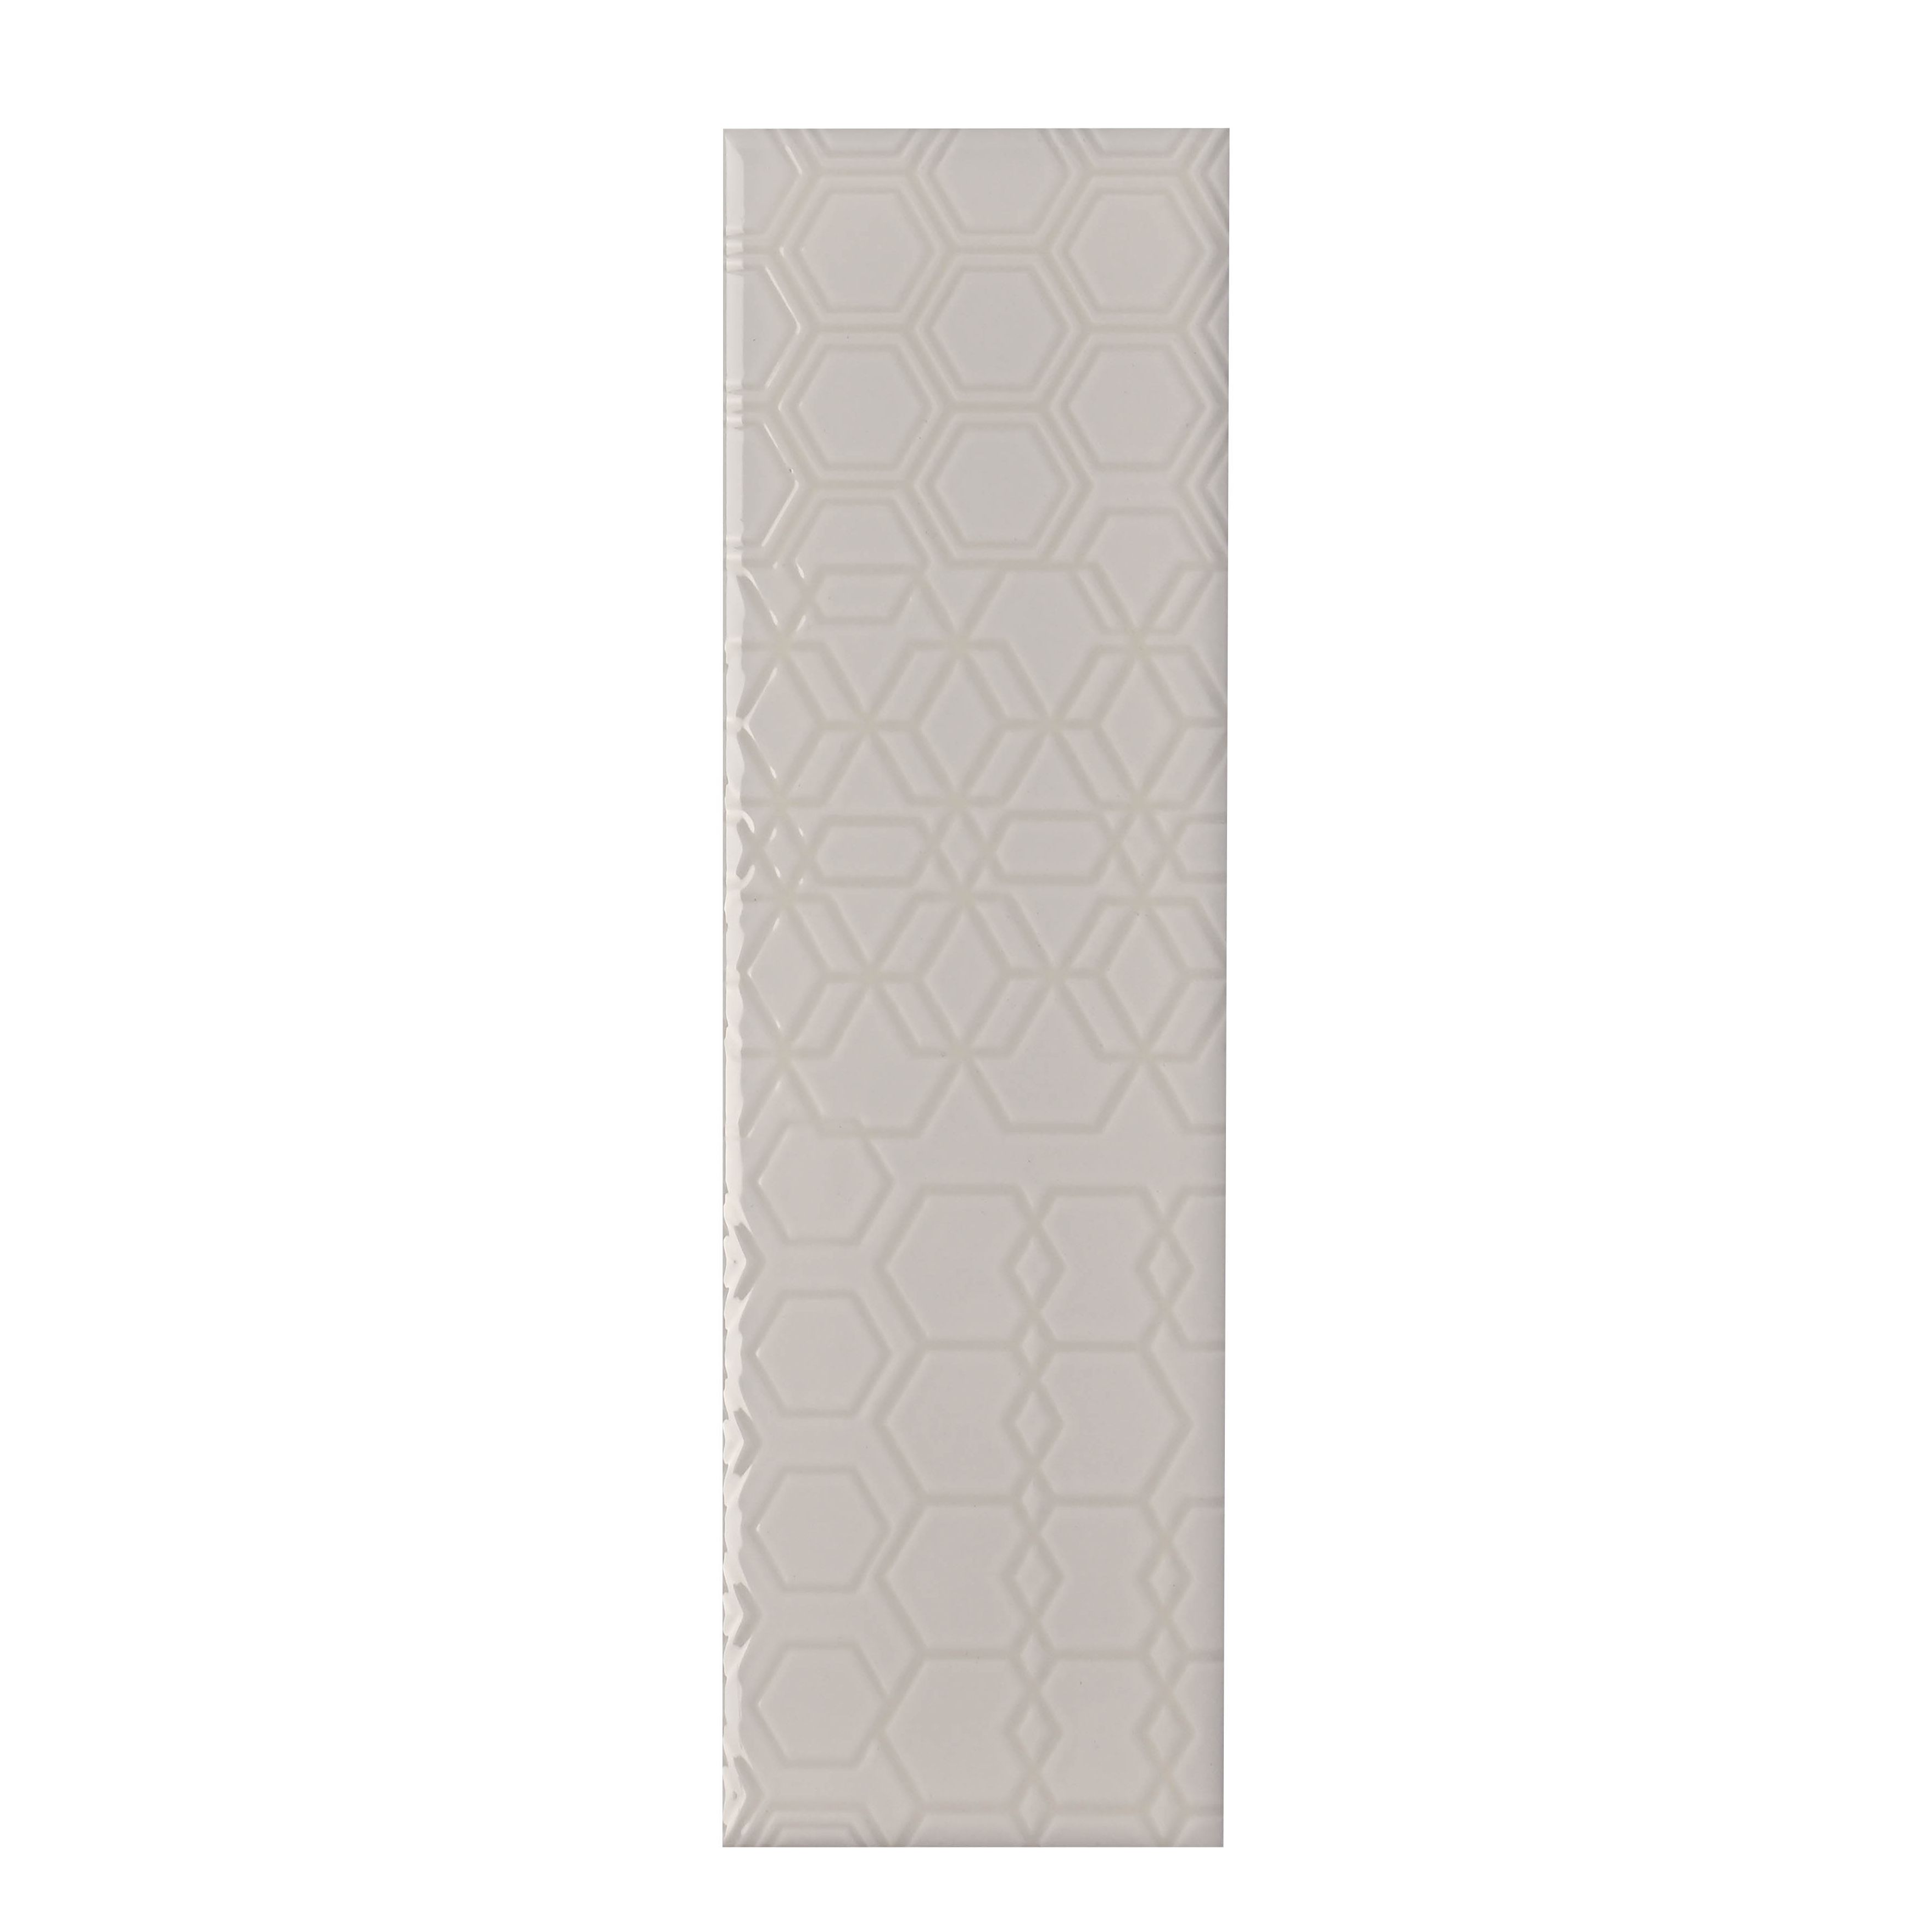 Mayfair White Gloss Patterned Ceramic Wall Tile, Pack of 54, (L)245mm (W)75mm